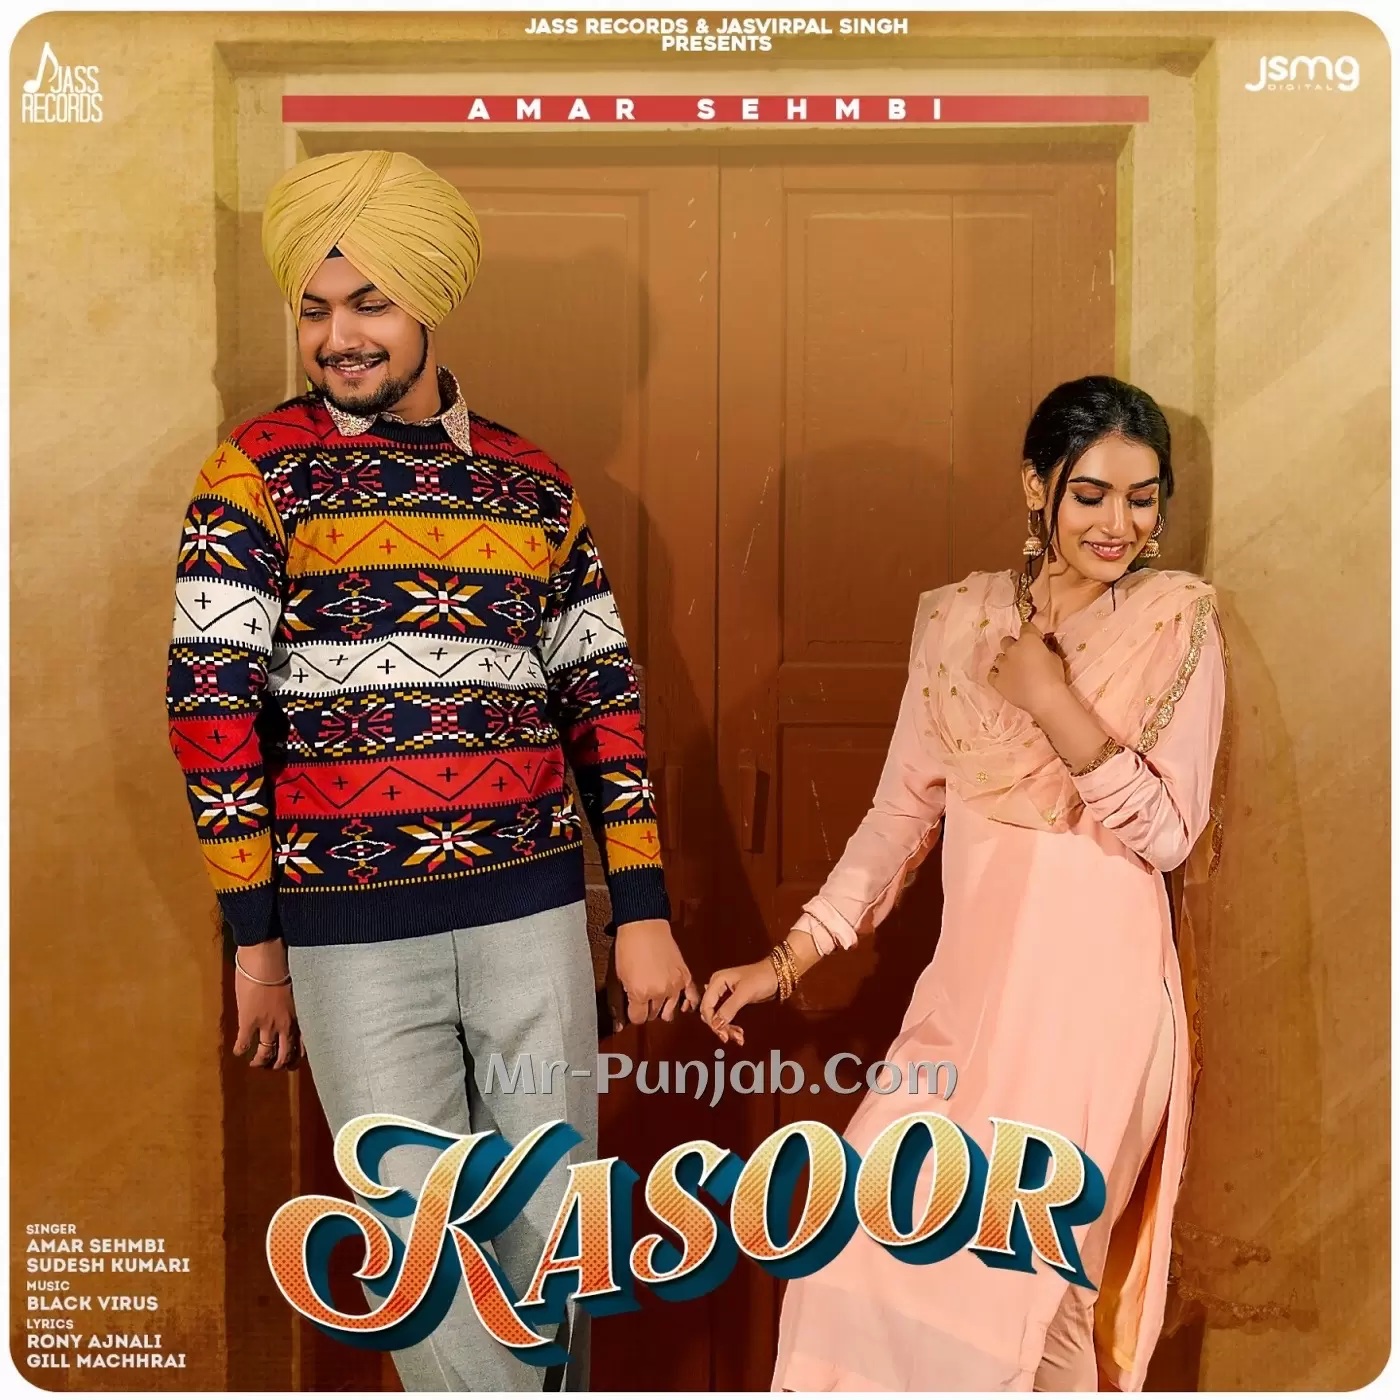 Kasoor Amar Sehmbi Mp3 Download Song - Mr-Punjab